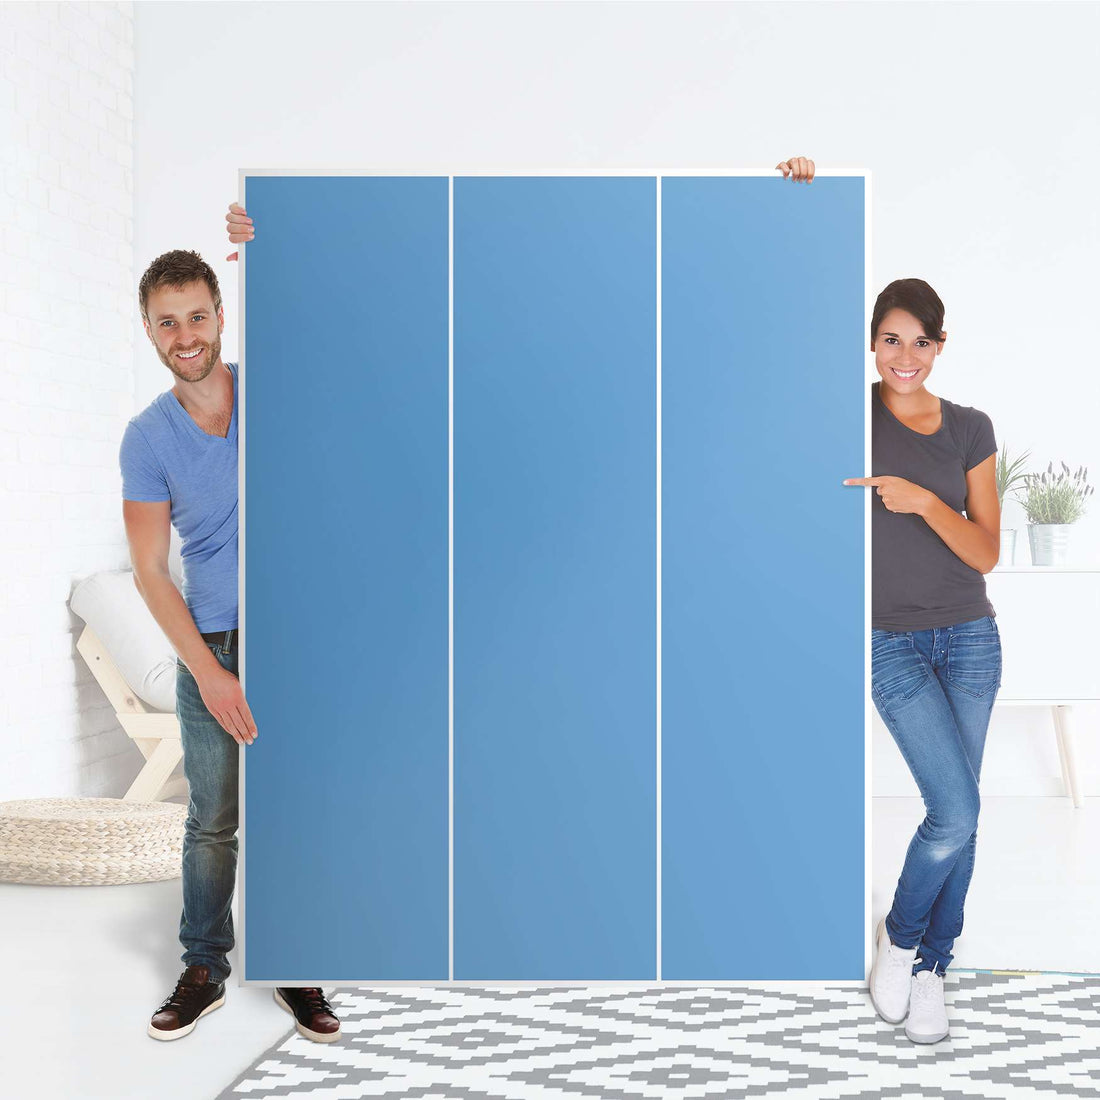 Folie für Möbel Blau Light - IKEA Pax Schrank 201 cm Höhe - 3 Türen - Folie